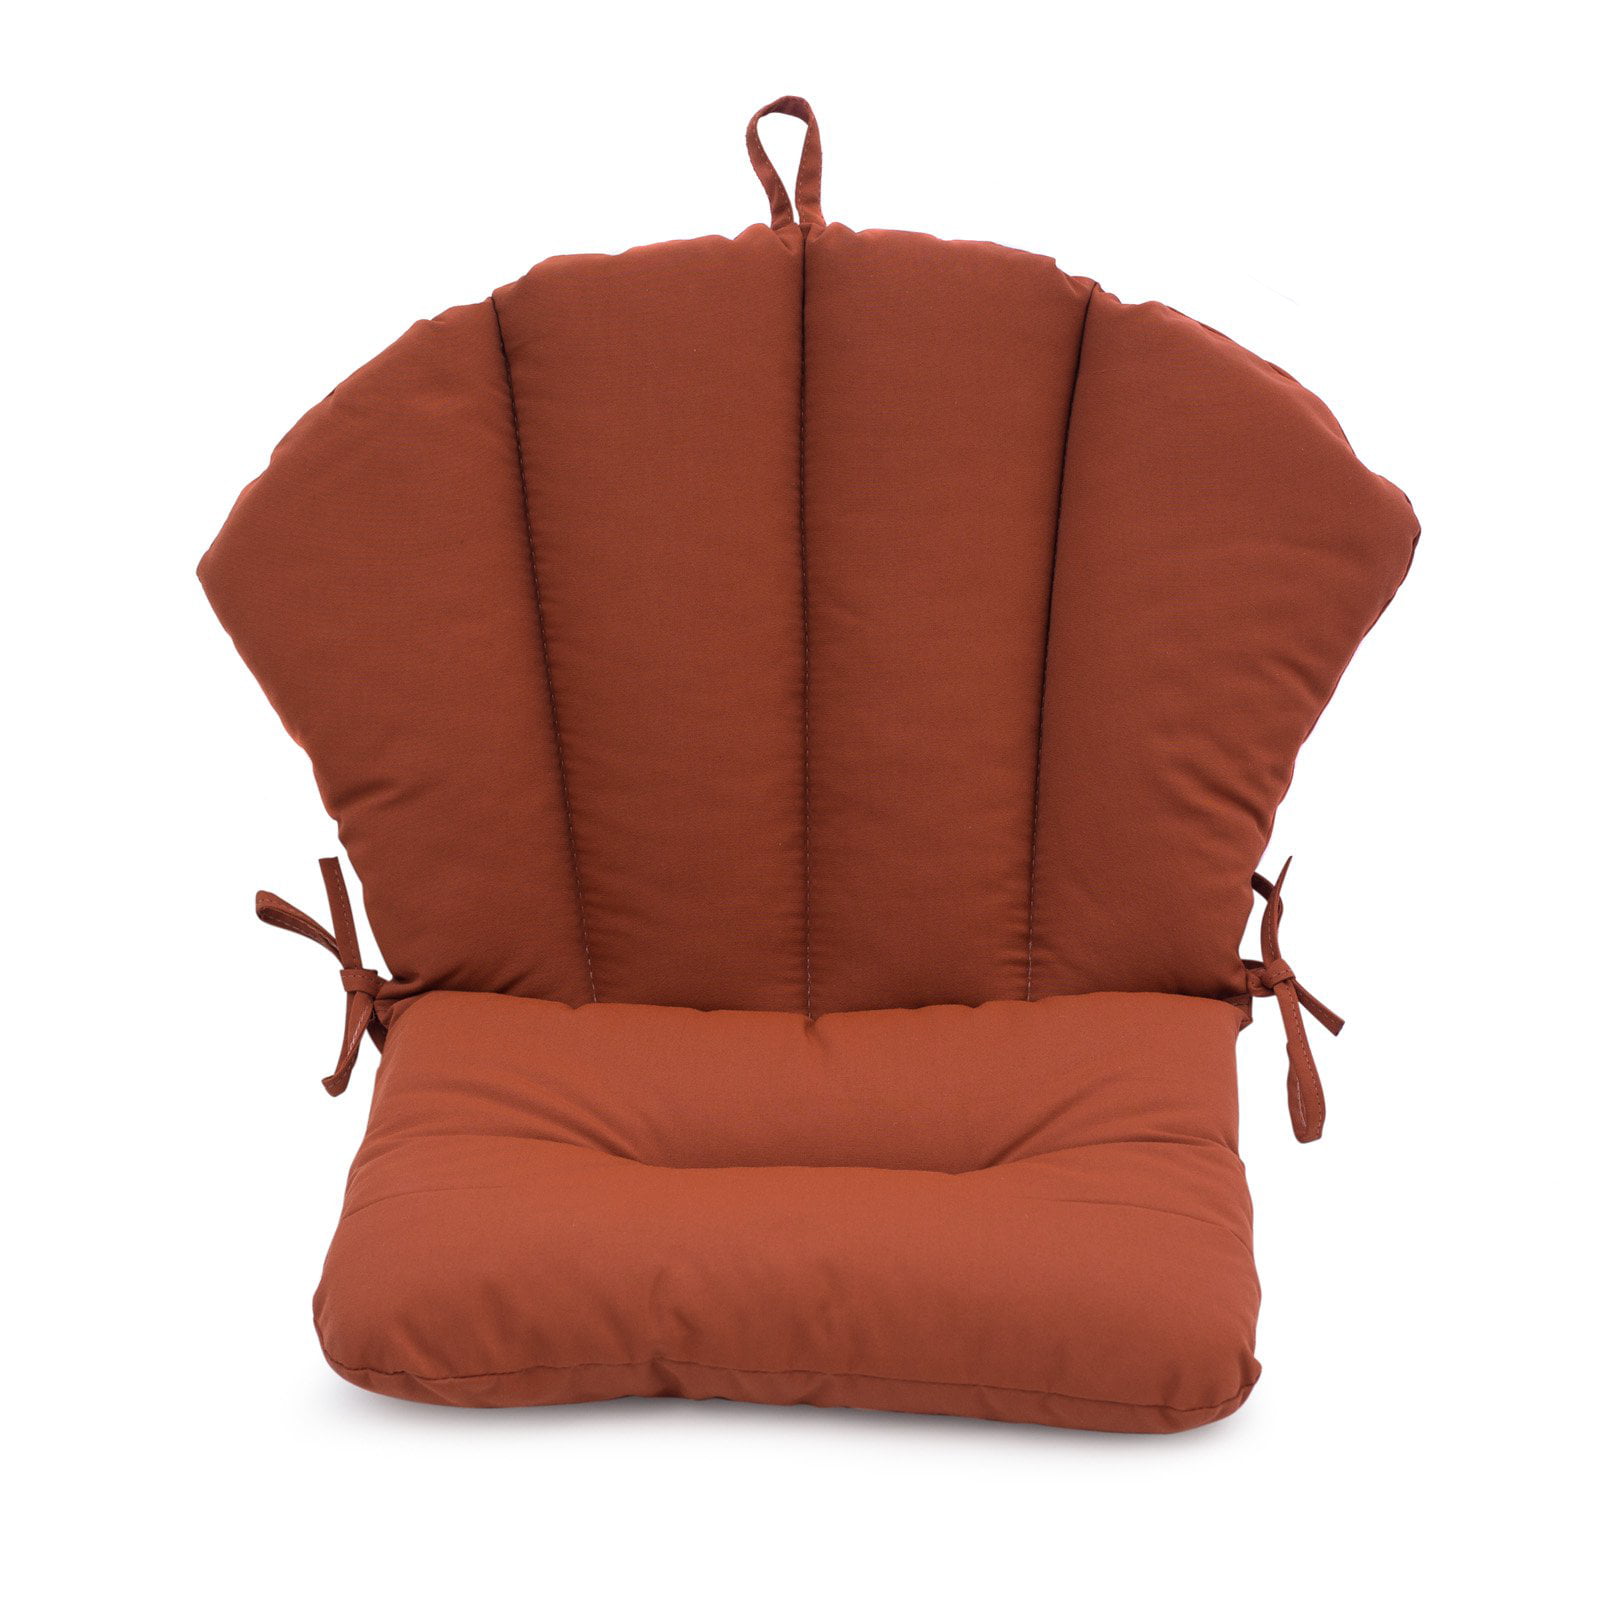 Coral Coast Cantara Barrel Back Chair Cushion - 30 x 18 in ...